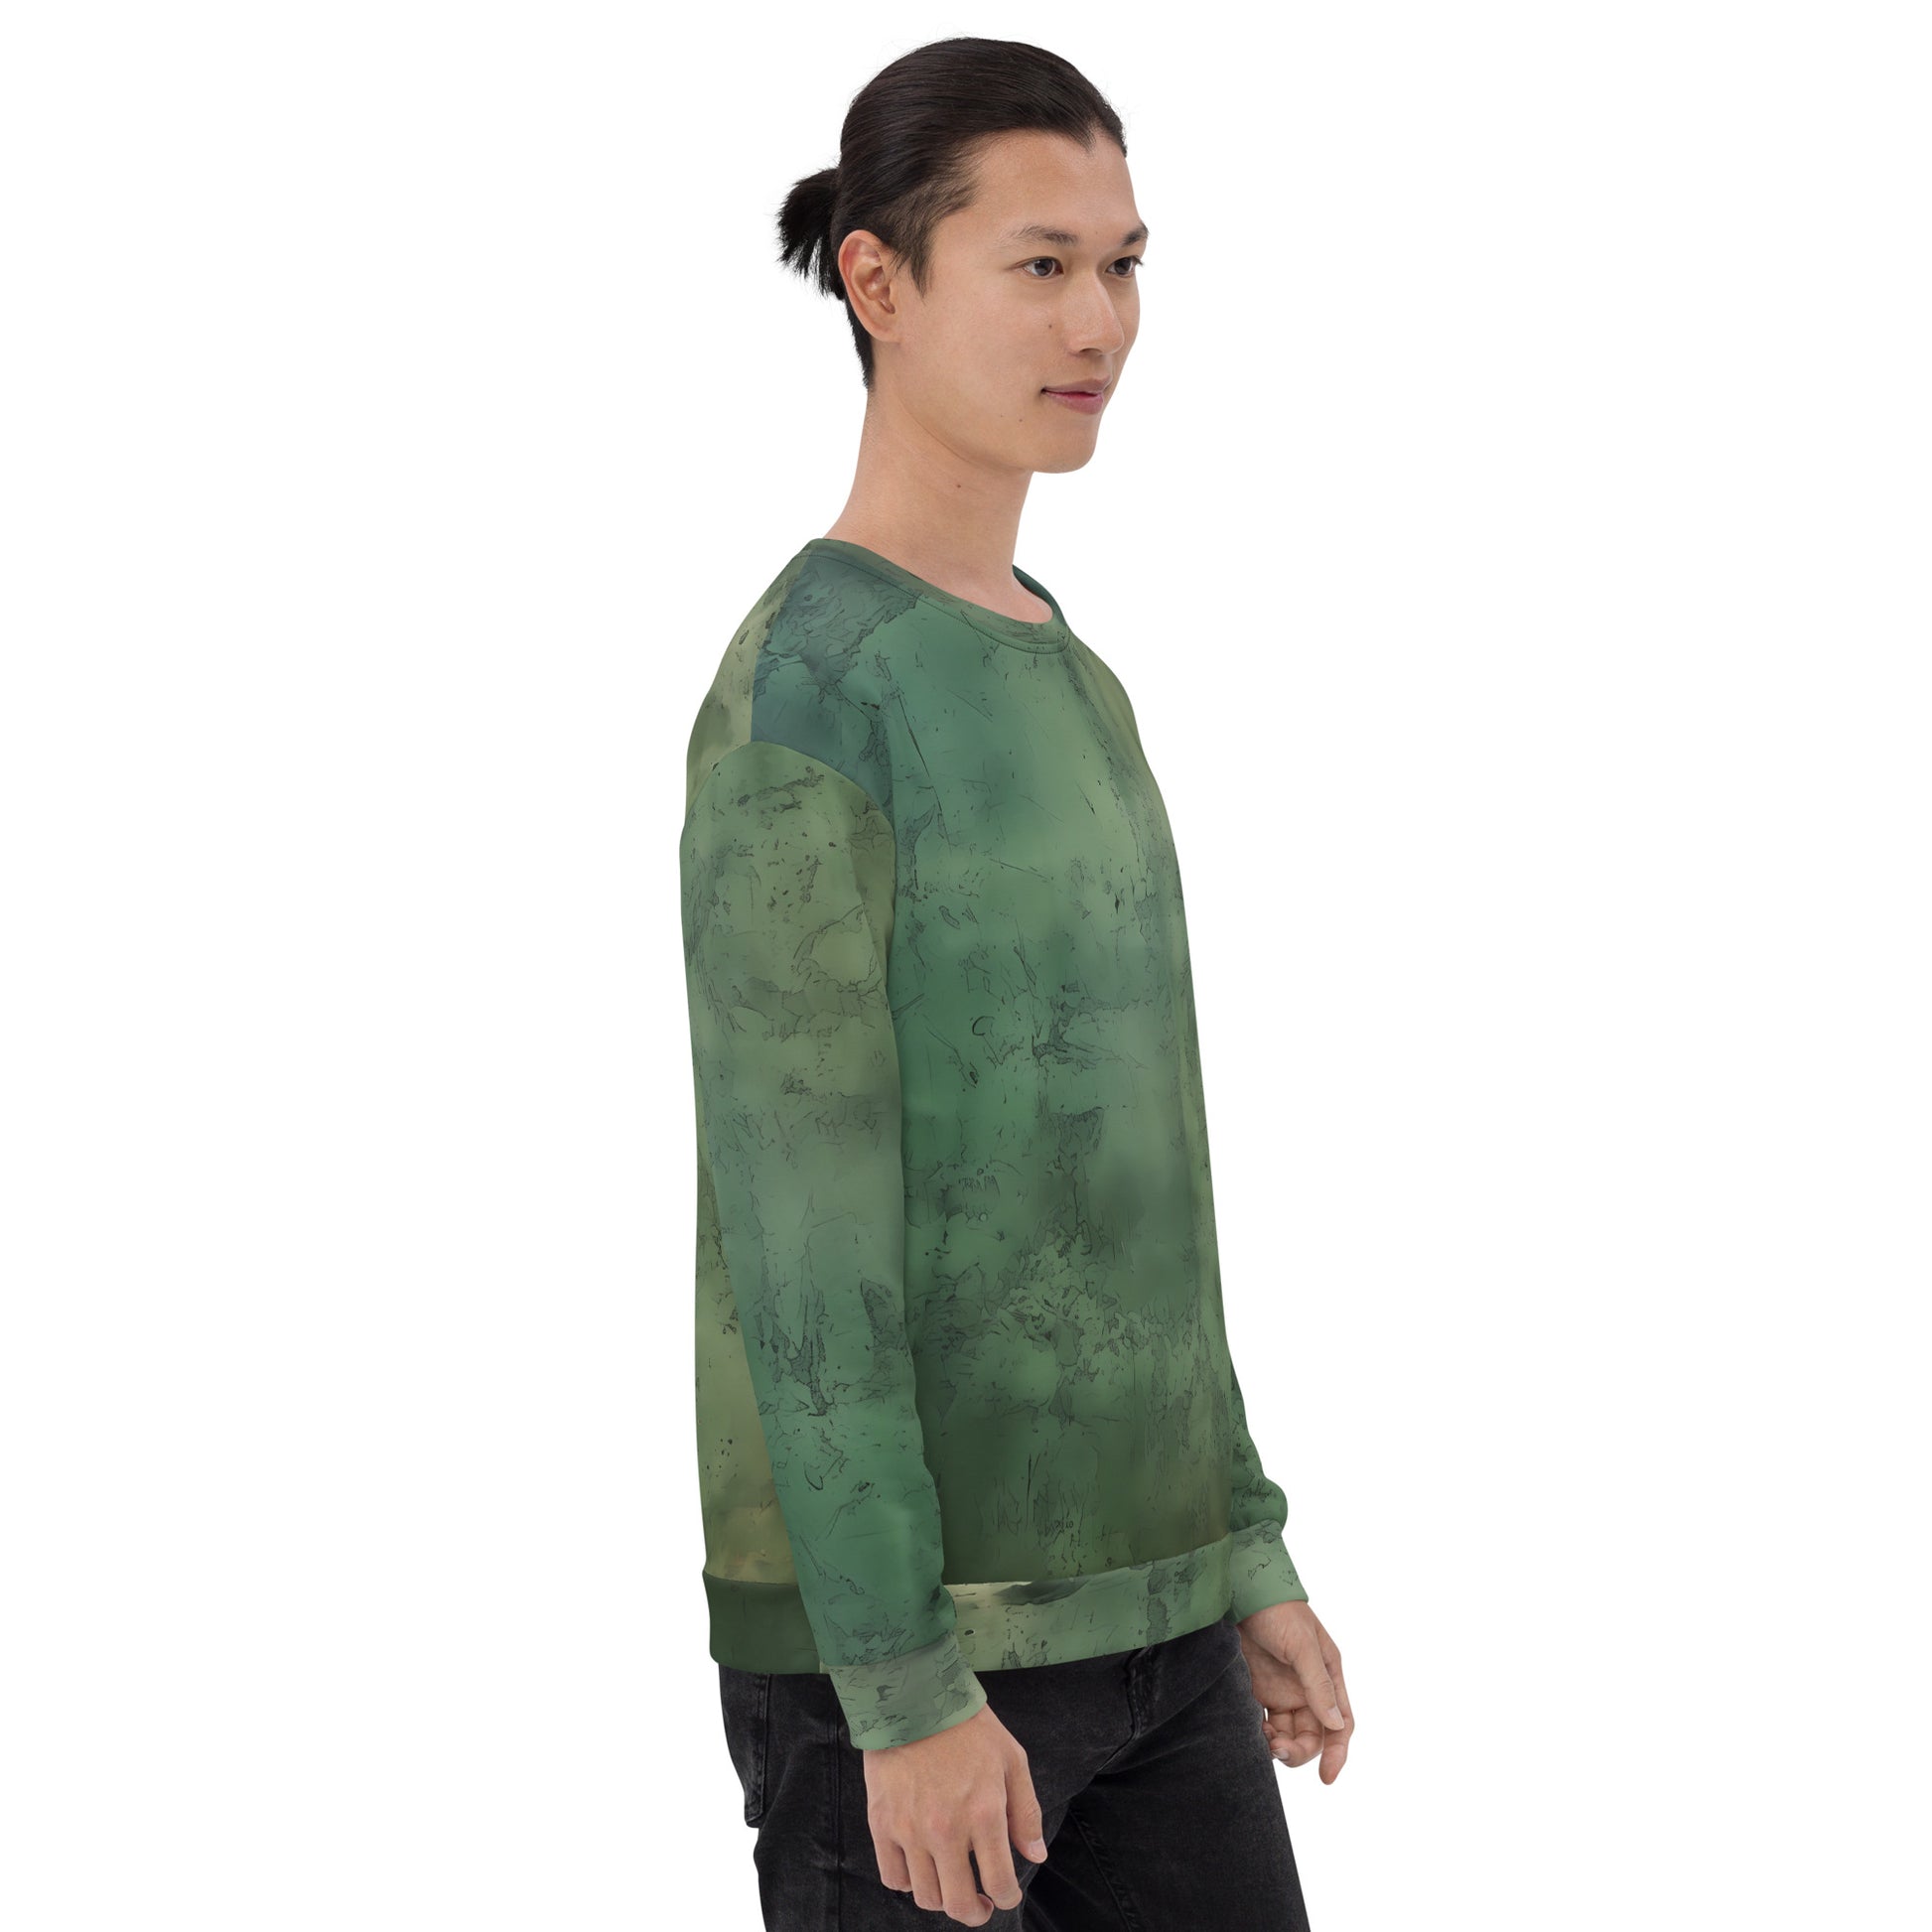 Versatile Green Elegance: Unisex Sweater for a Greener Wardrobe